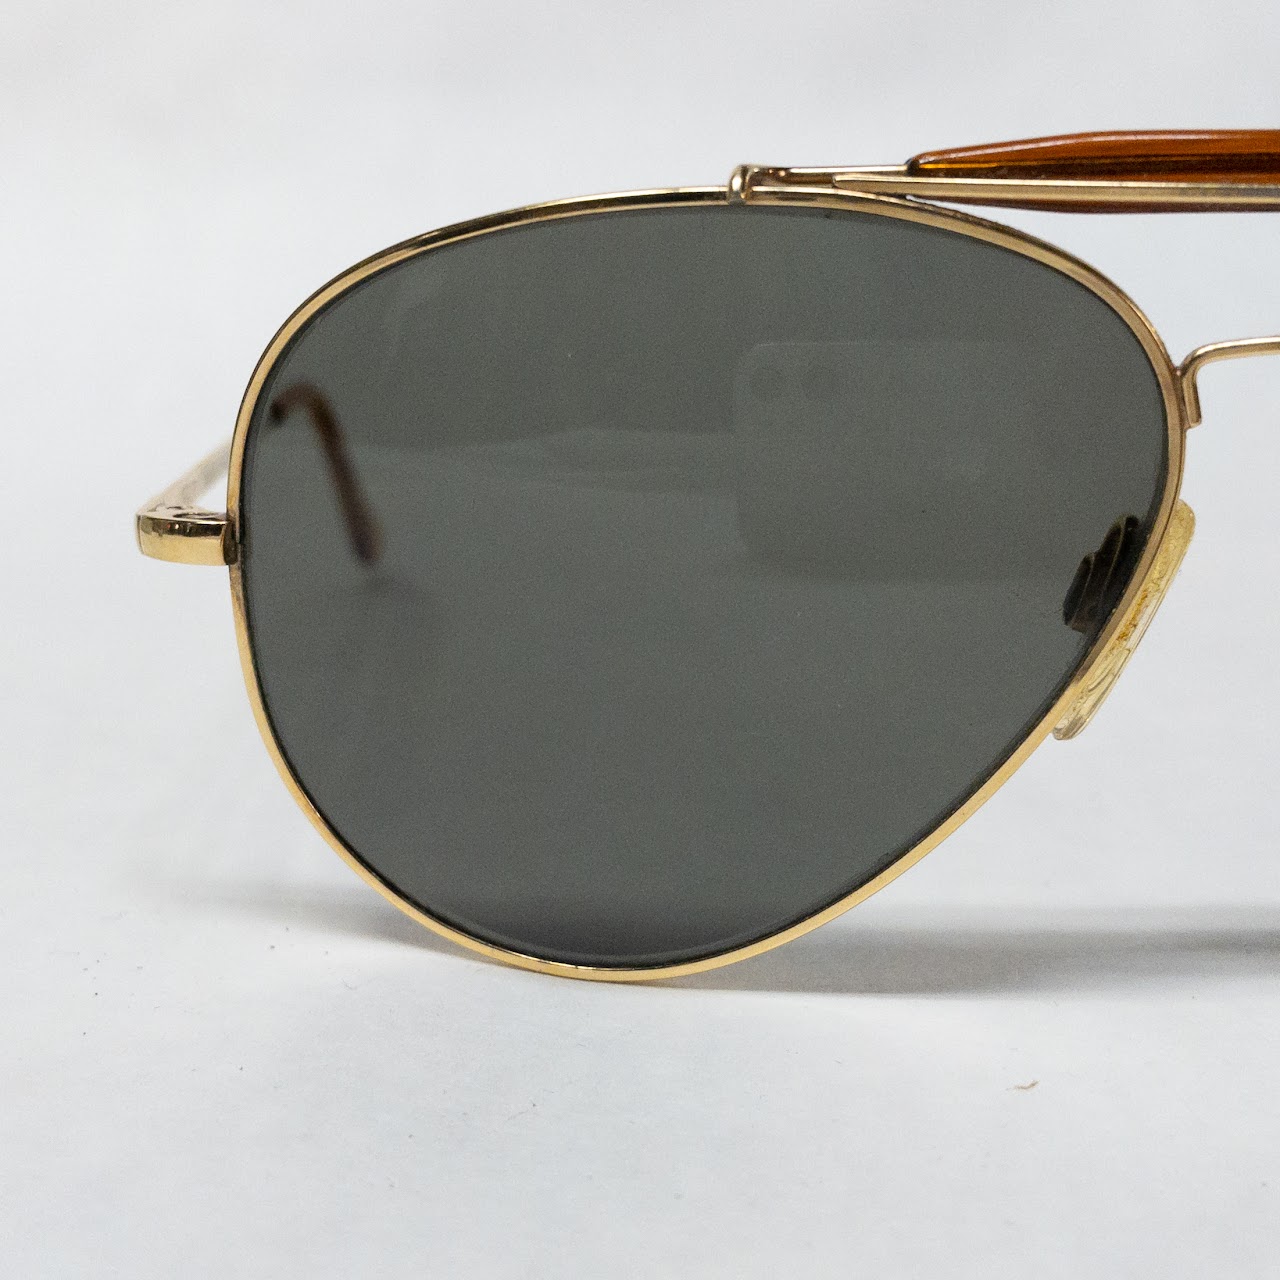 Randolph Sportsman 23K Gold Aviator Sunglasses